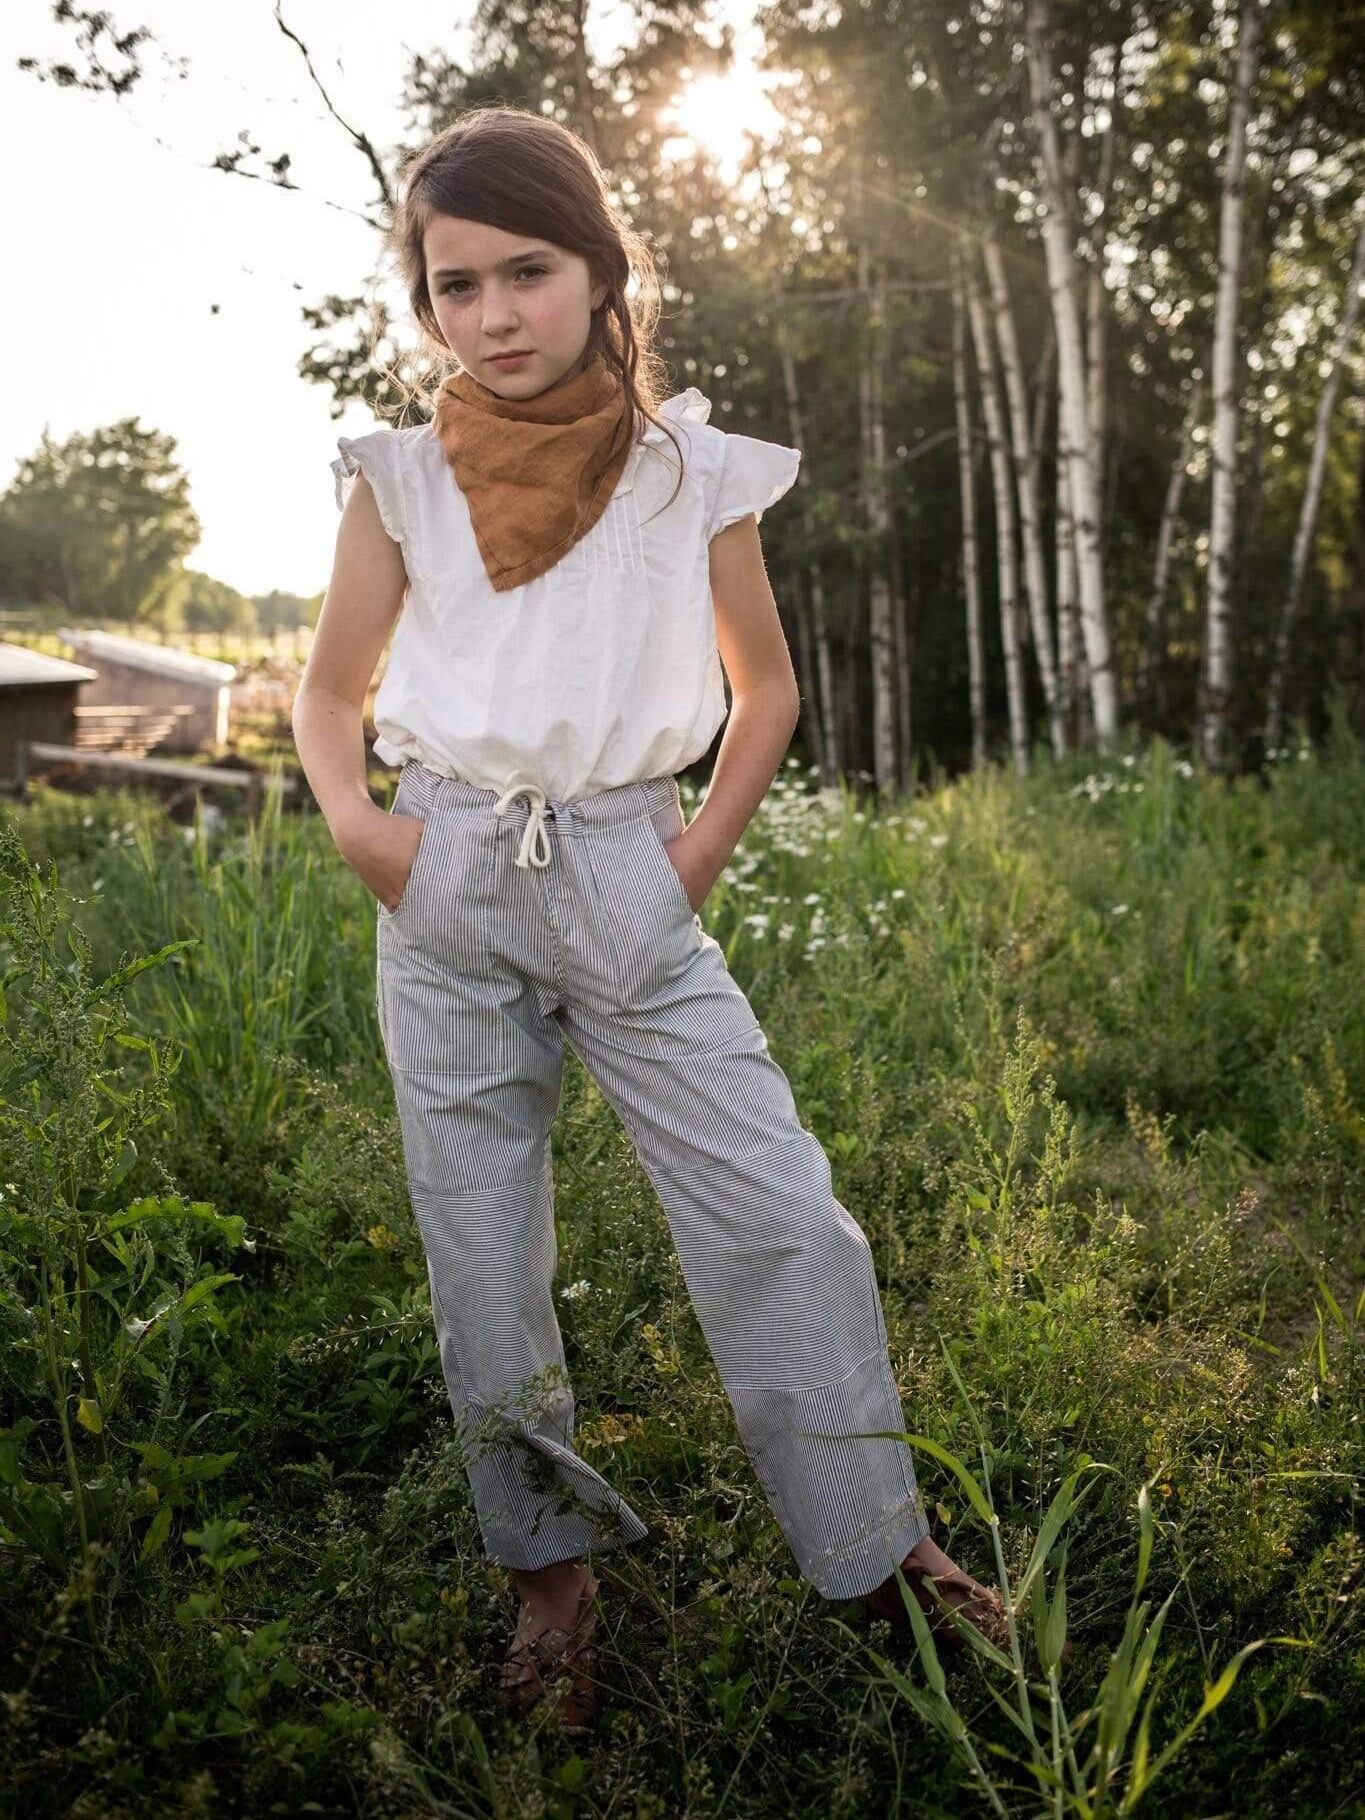 A little girl standing in a field wearing a scarf.